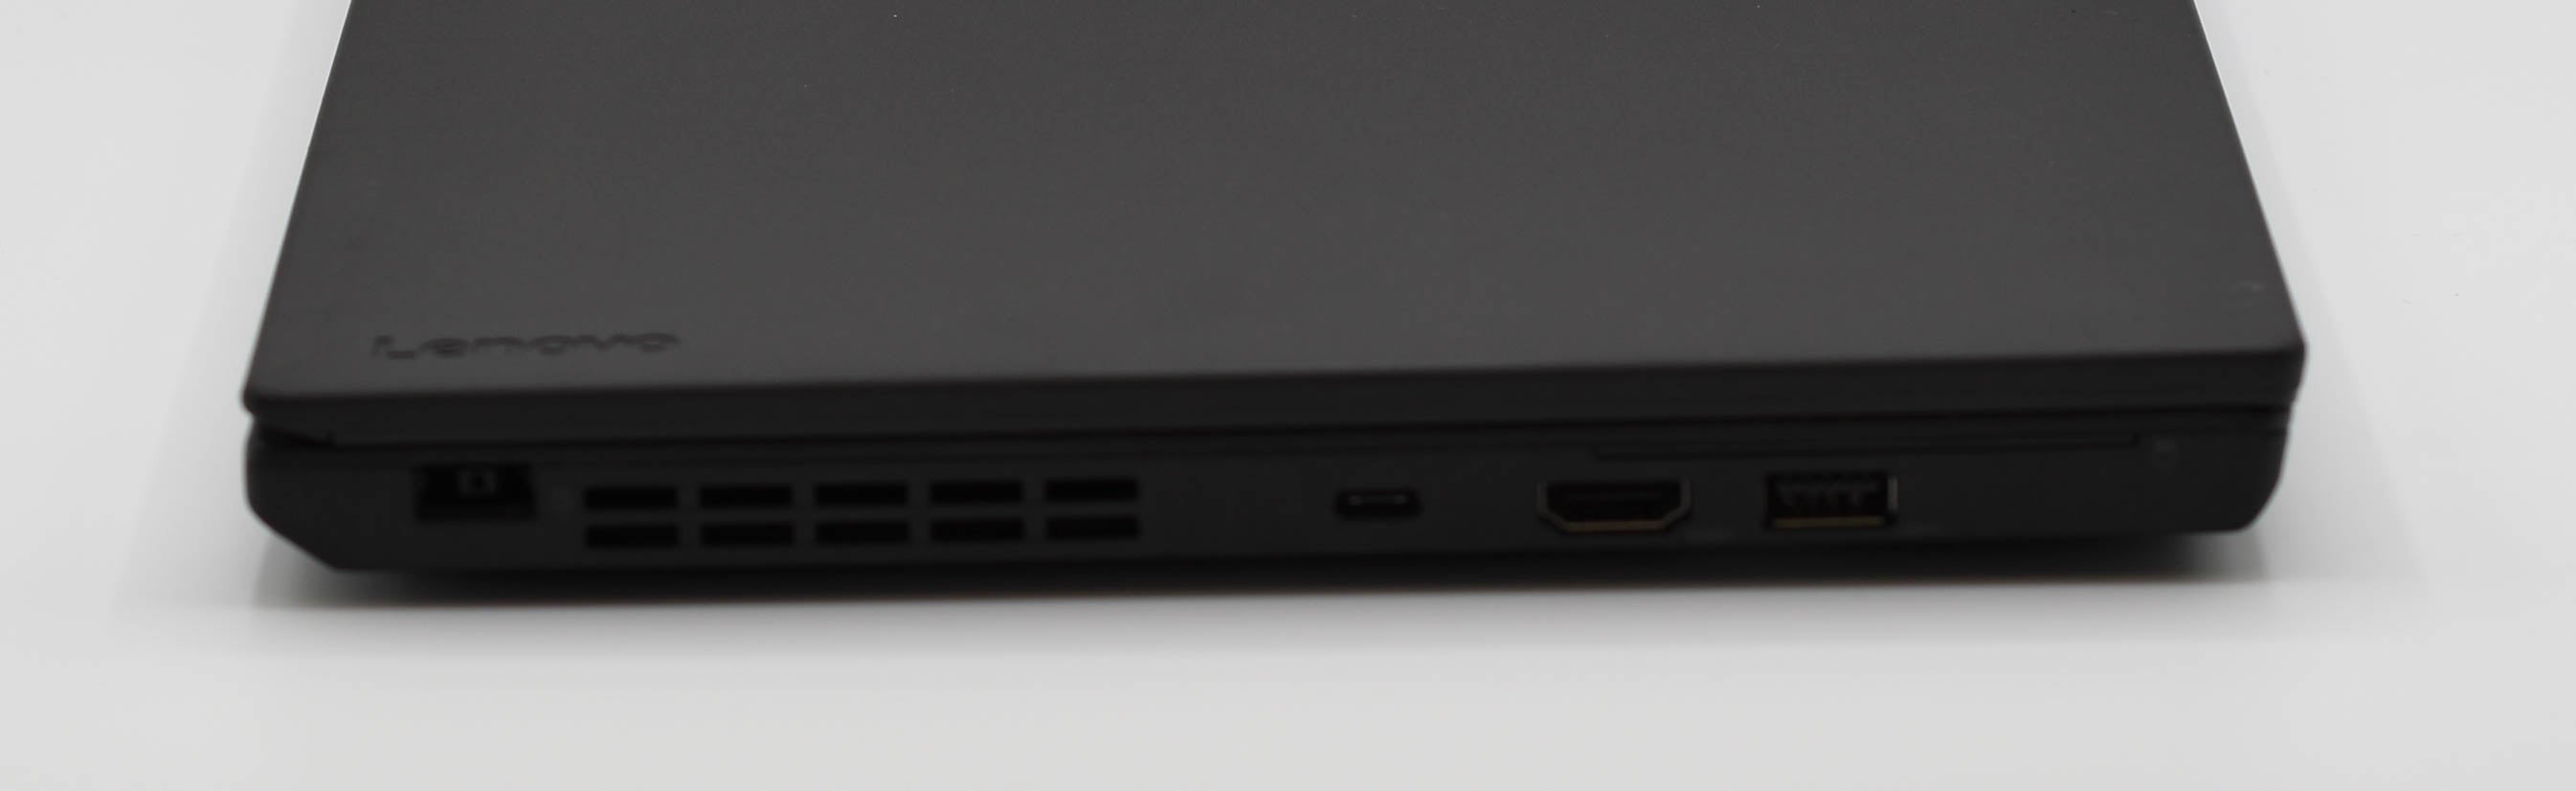 Lenovo ThinkPad X270 Core i5-6200U 8GB 256GB SSD Window 10